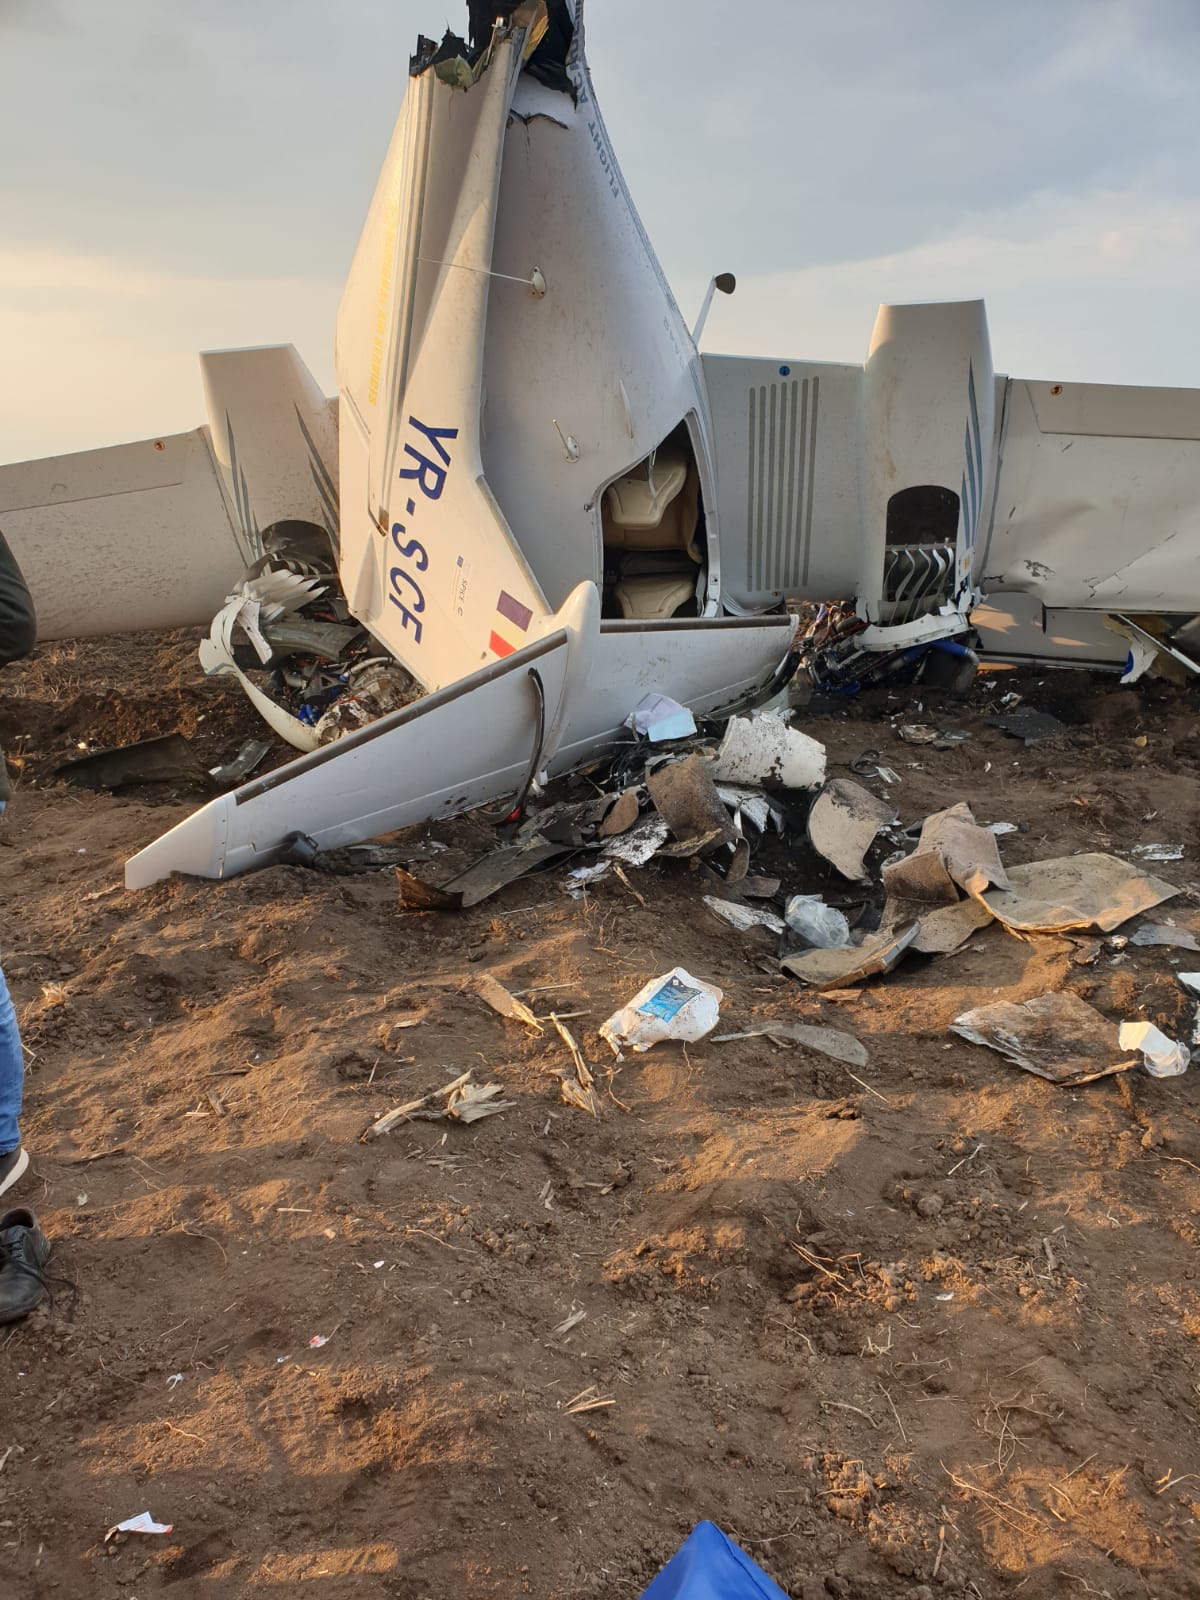 UPDATE FOTO/VIDEO BREAKING NEWS Accident aviatic la Tuzla. Copilotul a murit!